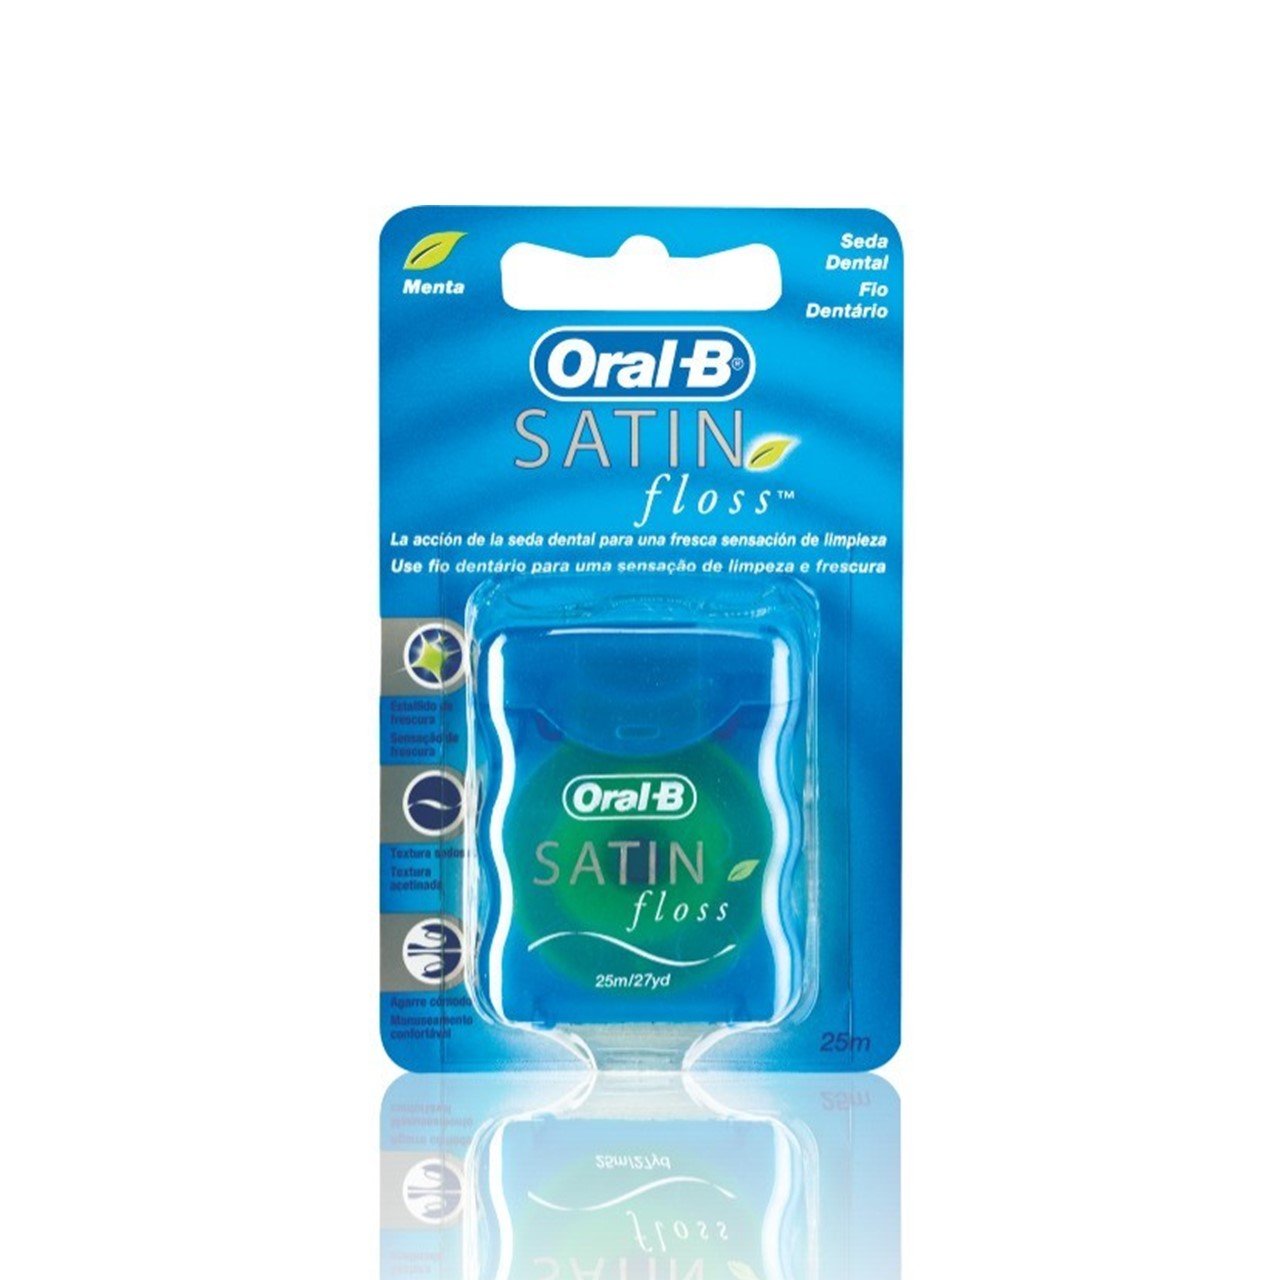 Oral-B Dental Satin Floss Mint 25m Japan (JPY¥)